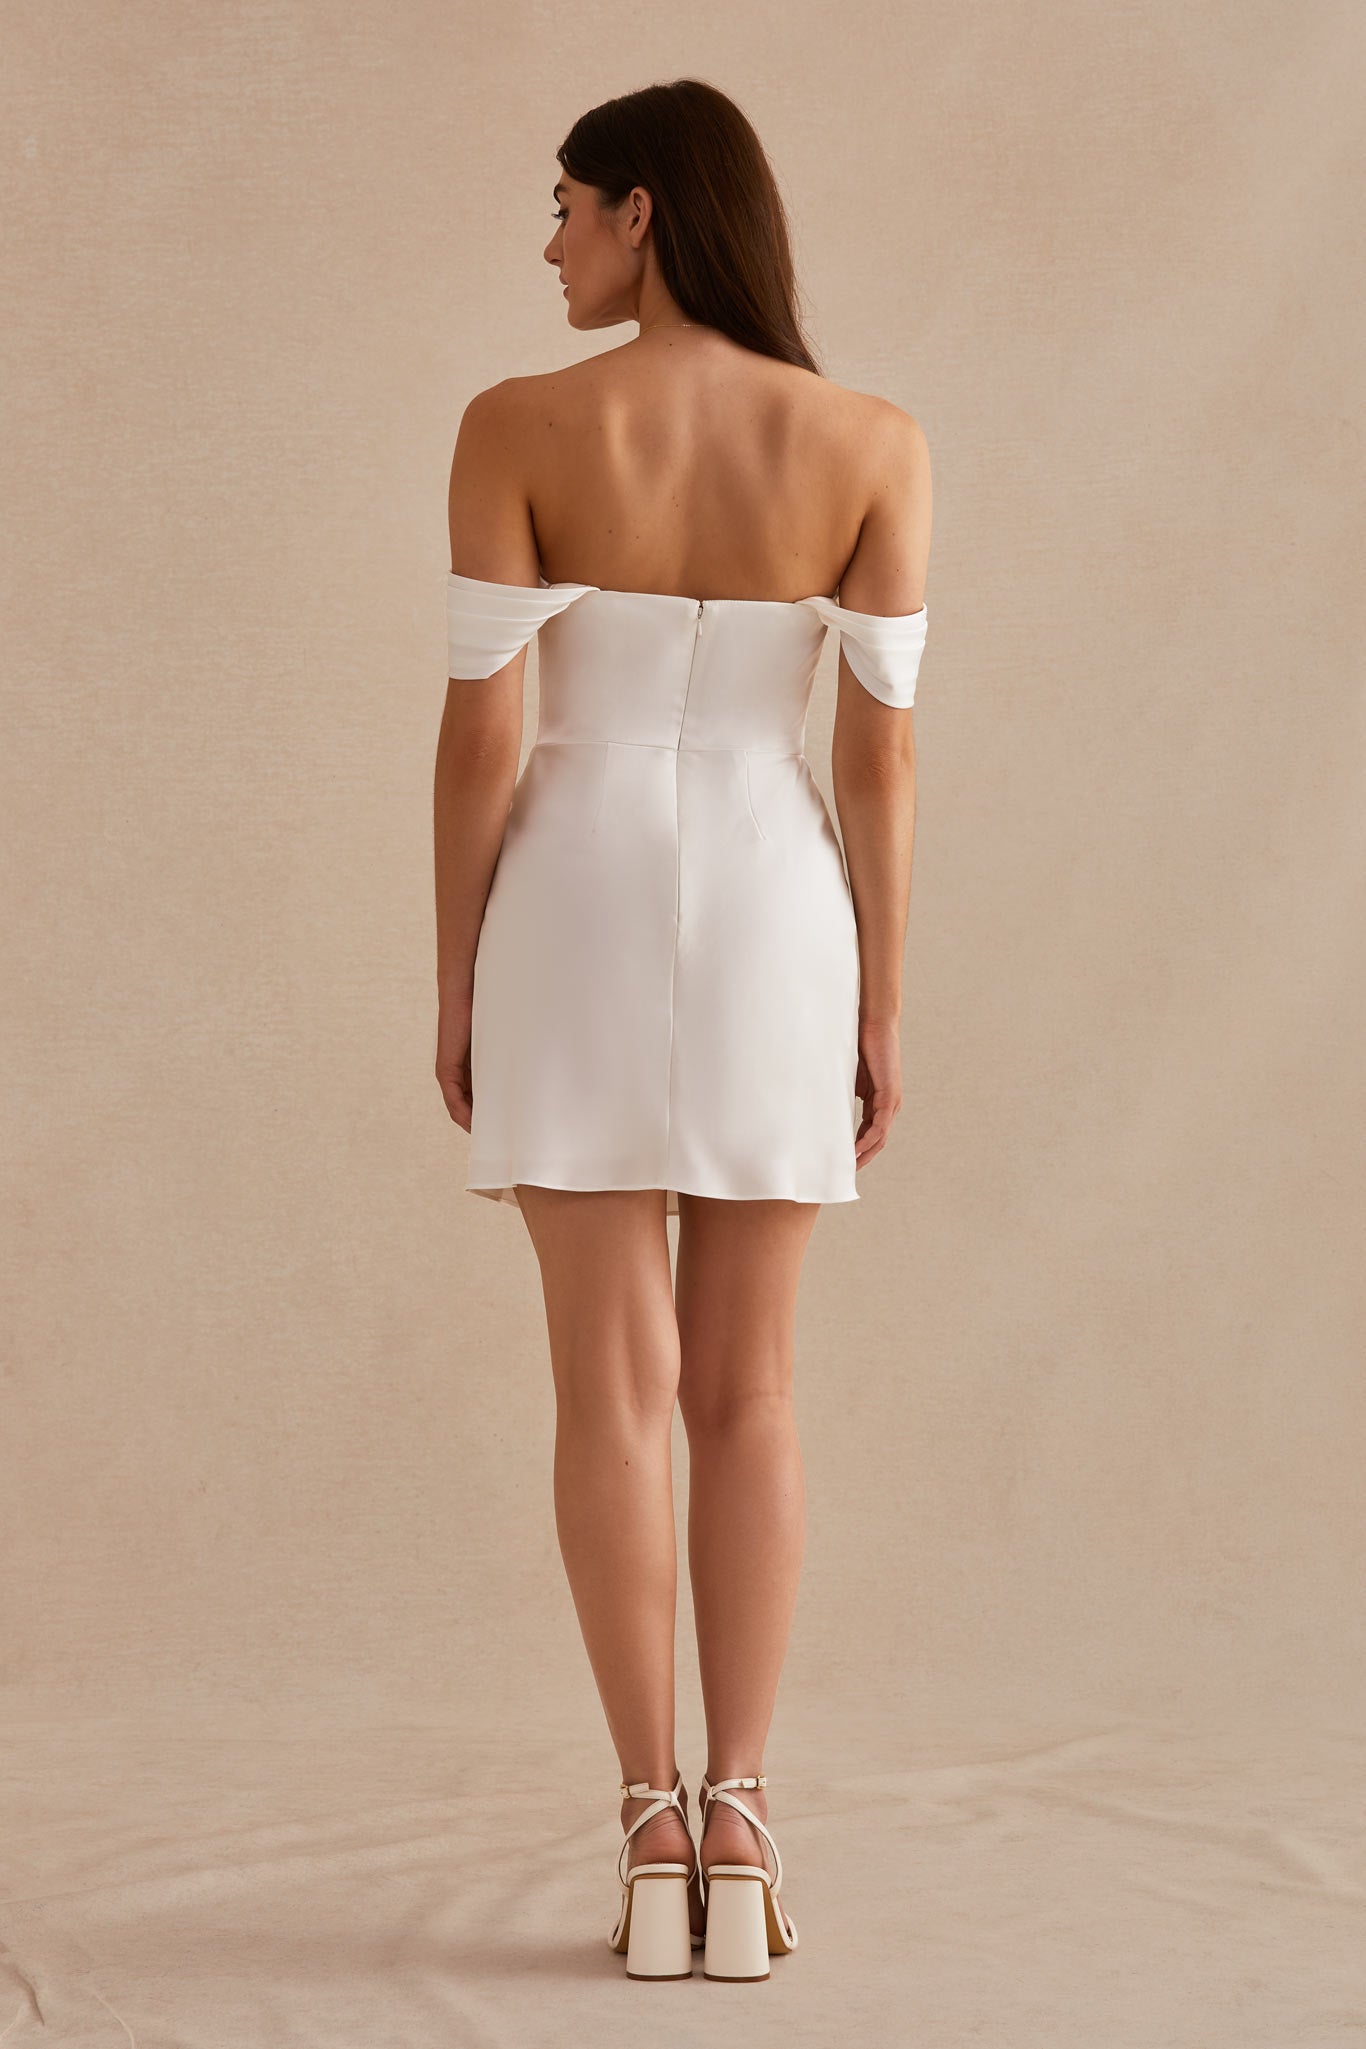 Mia Matte Satin Convertible White Mini Dress